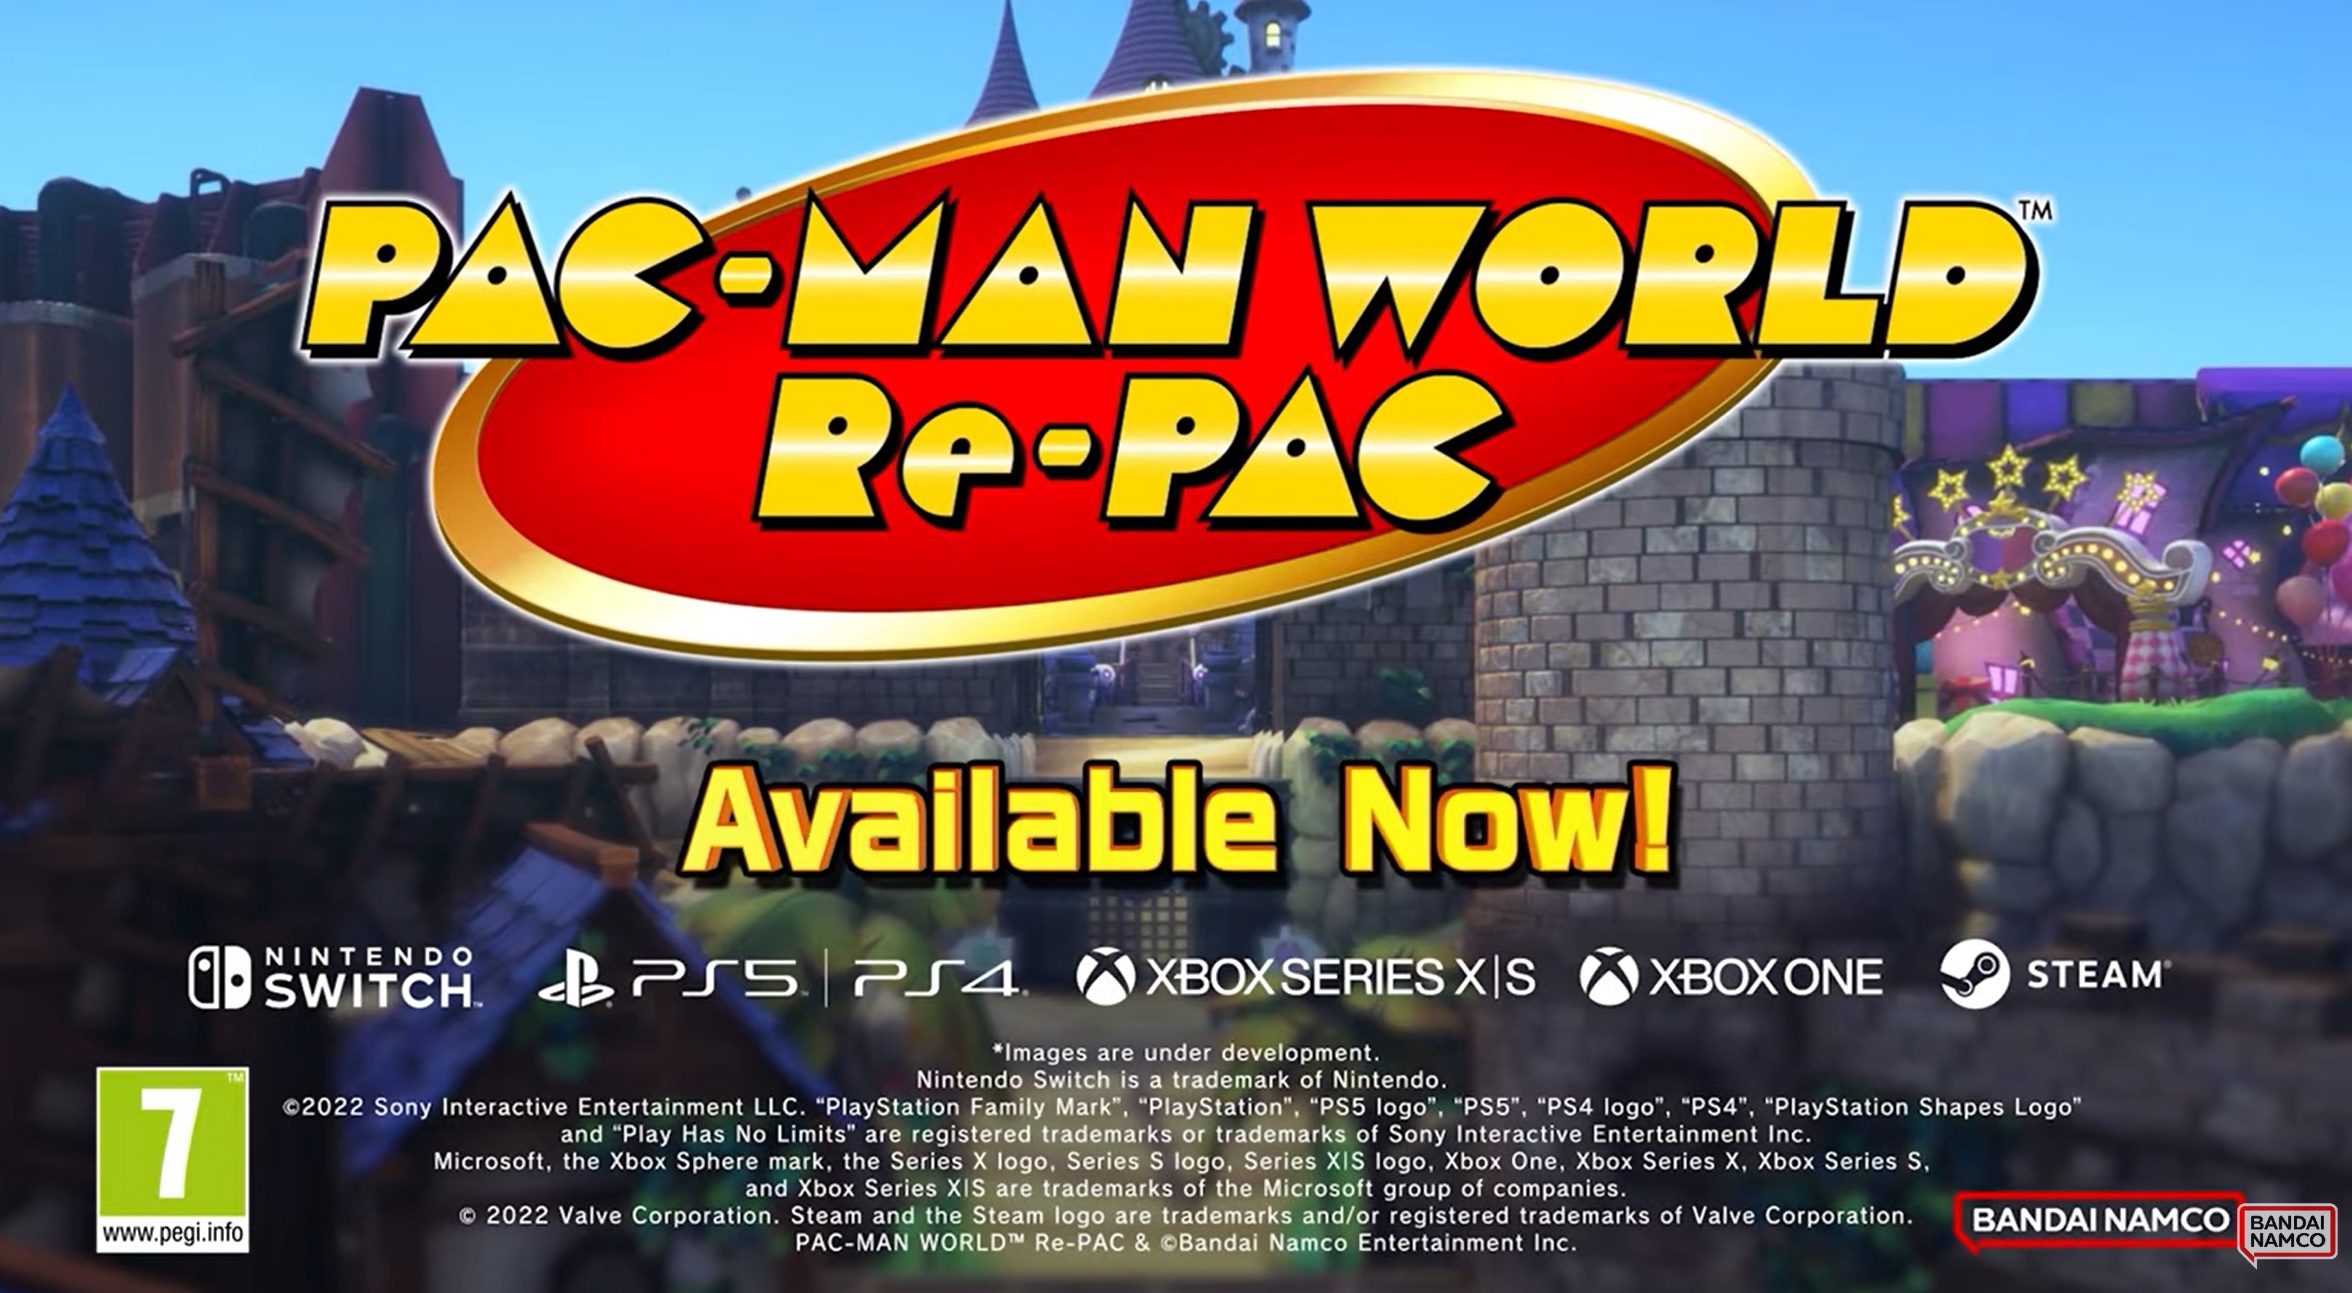 PAC-MAN WORLD RE-PAC - DLC